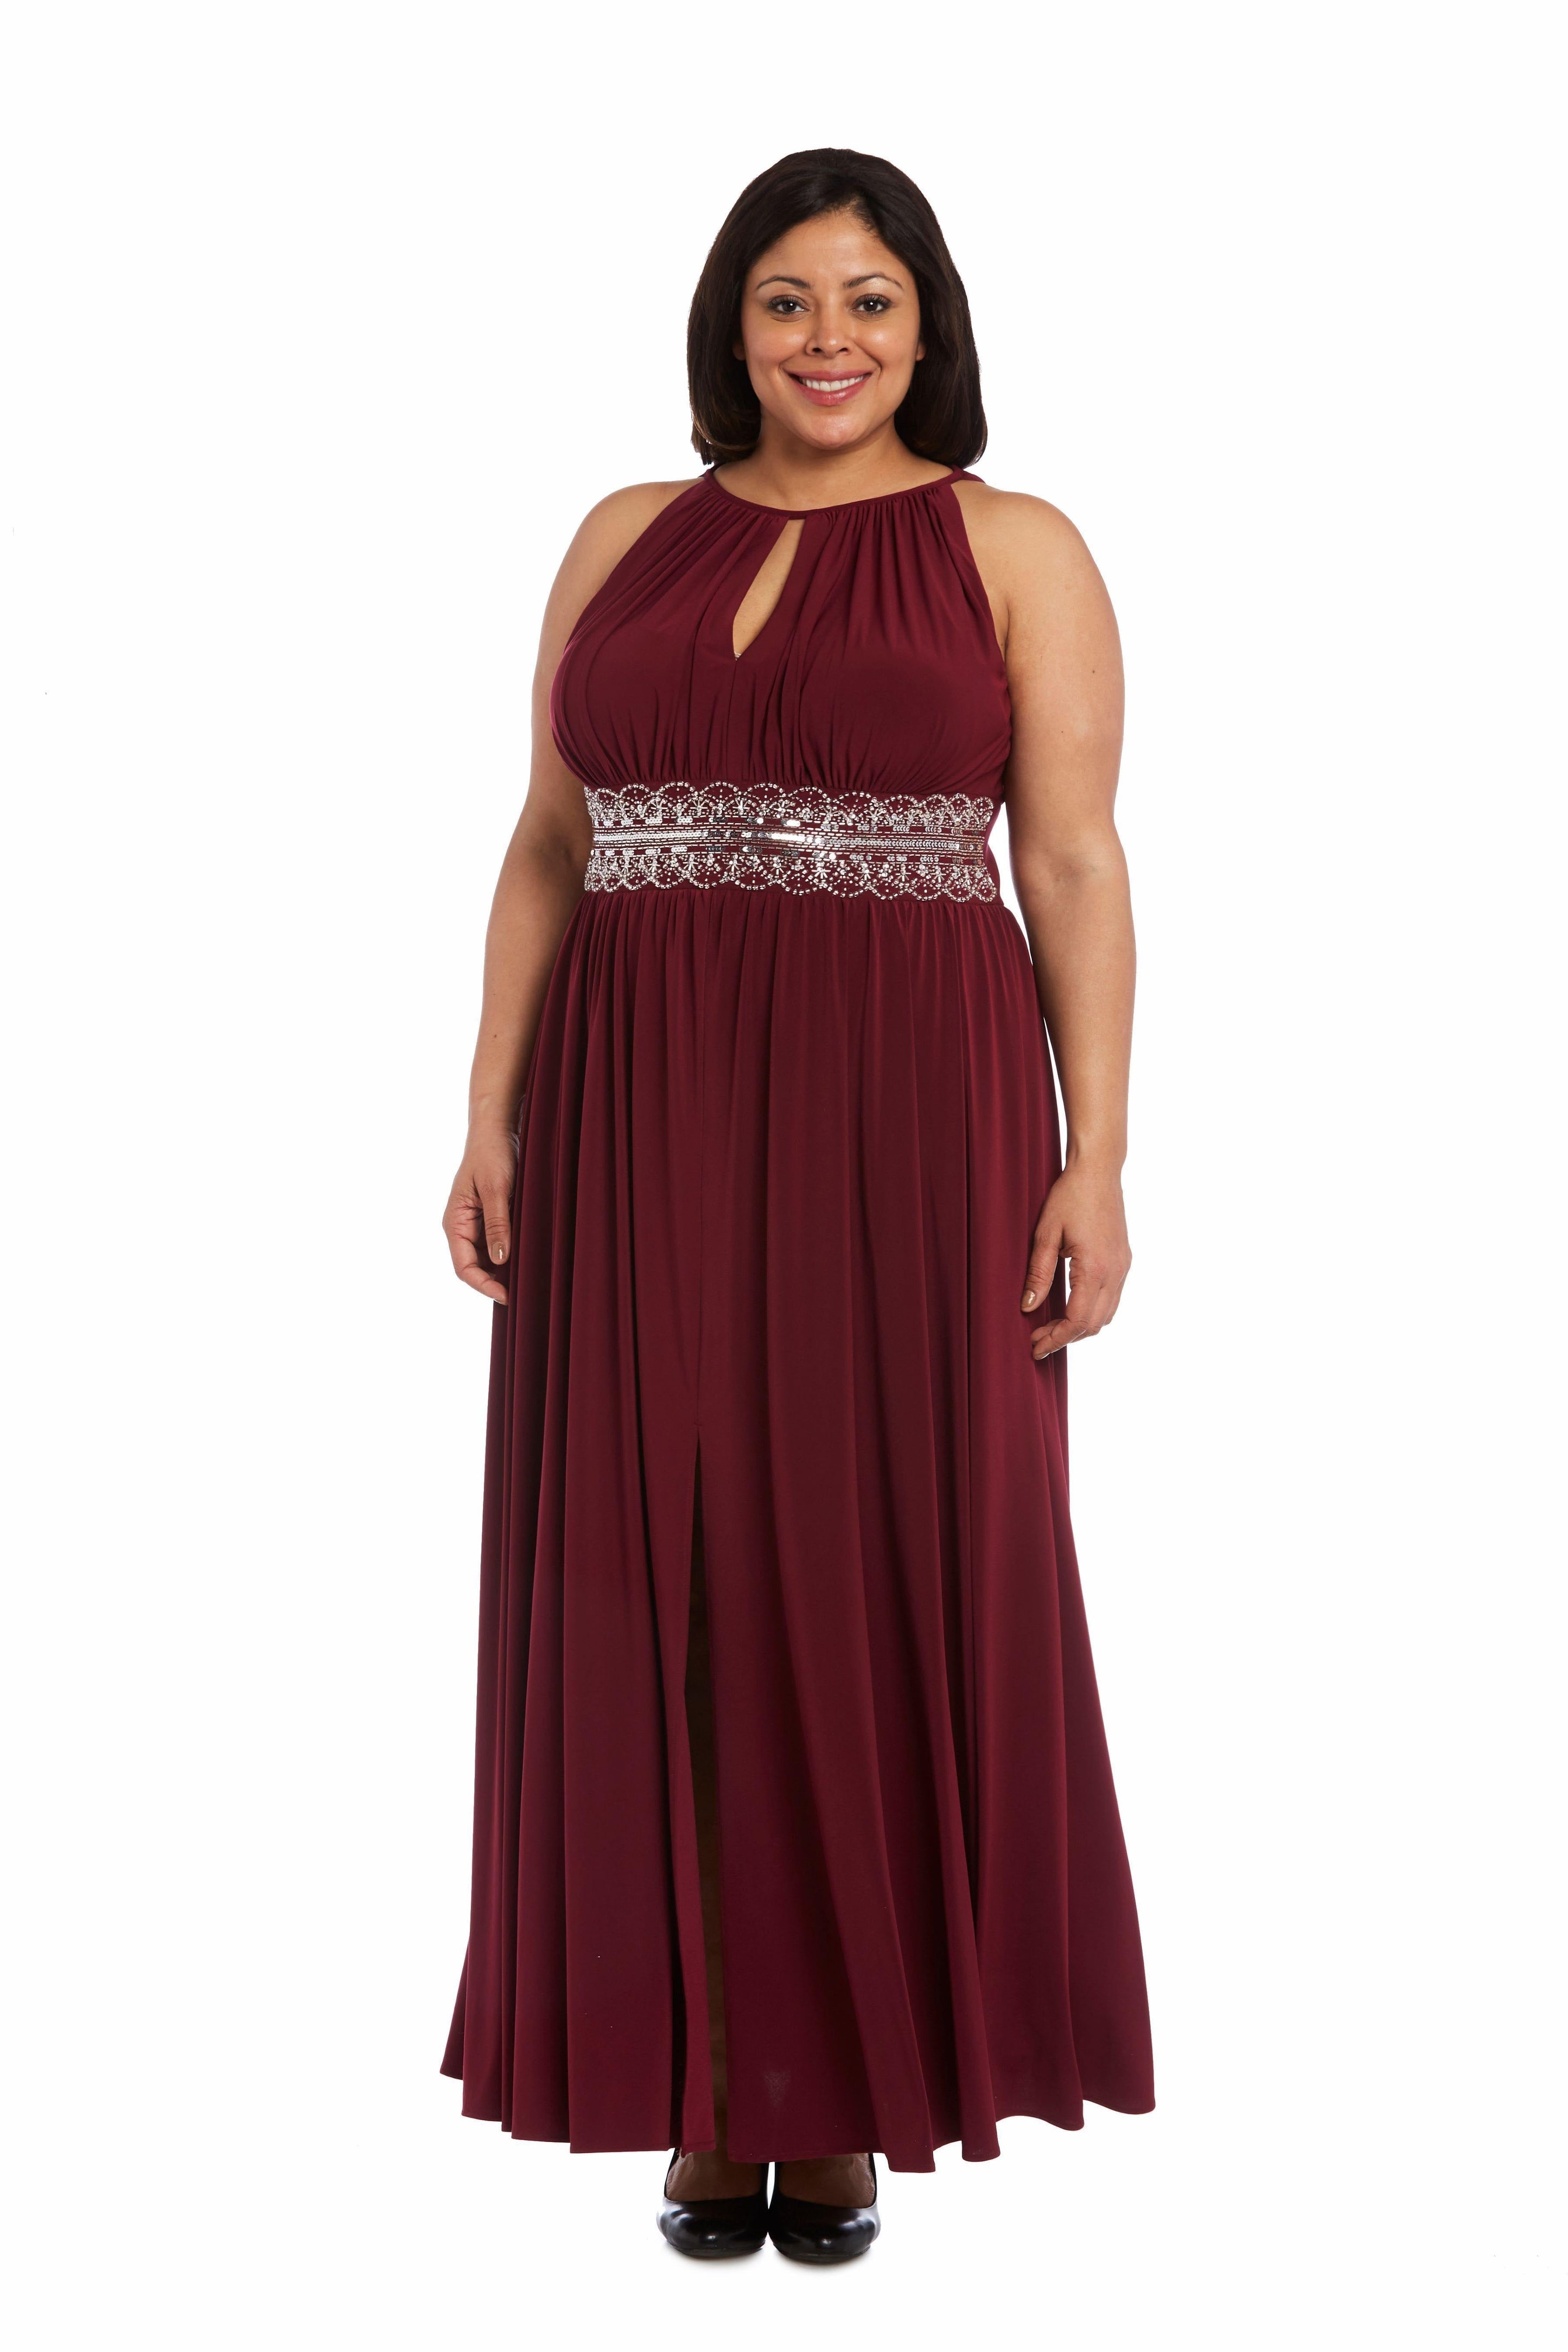 R&M Richards 1328W Long Plus Size Embellished Waist Dress for $105.99 ...